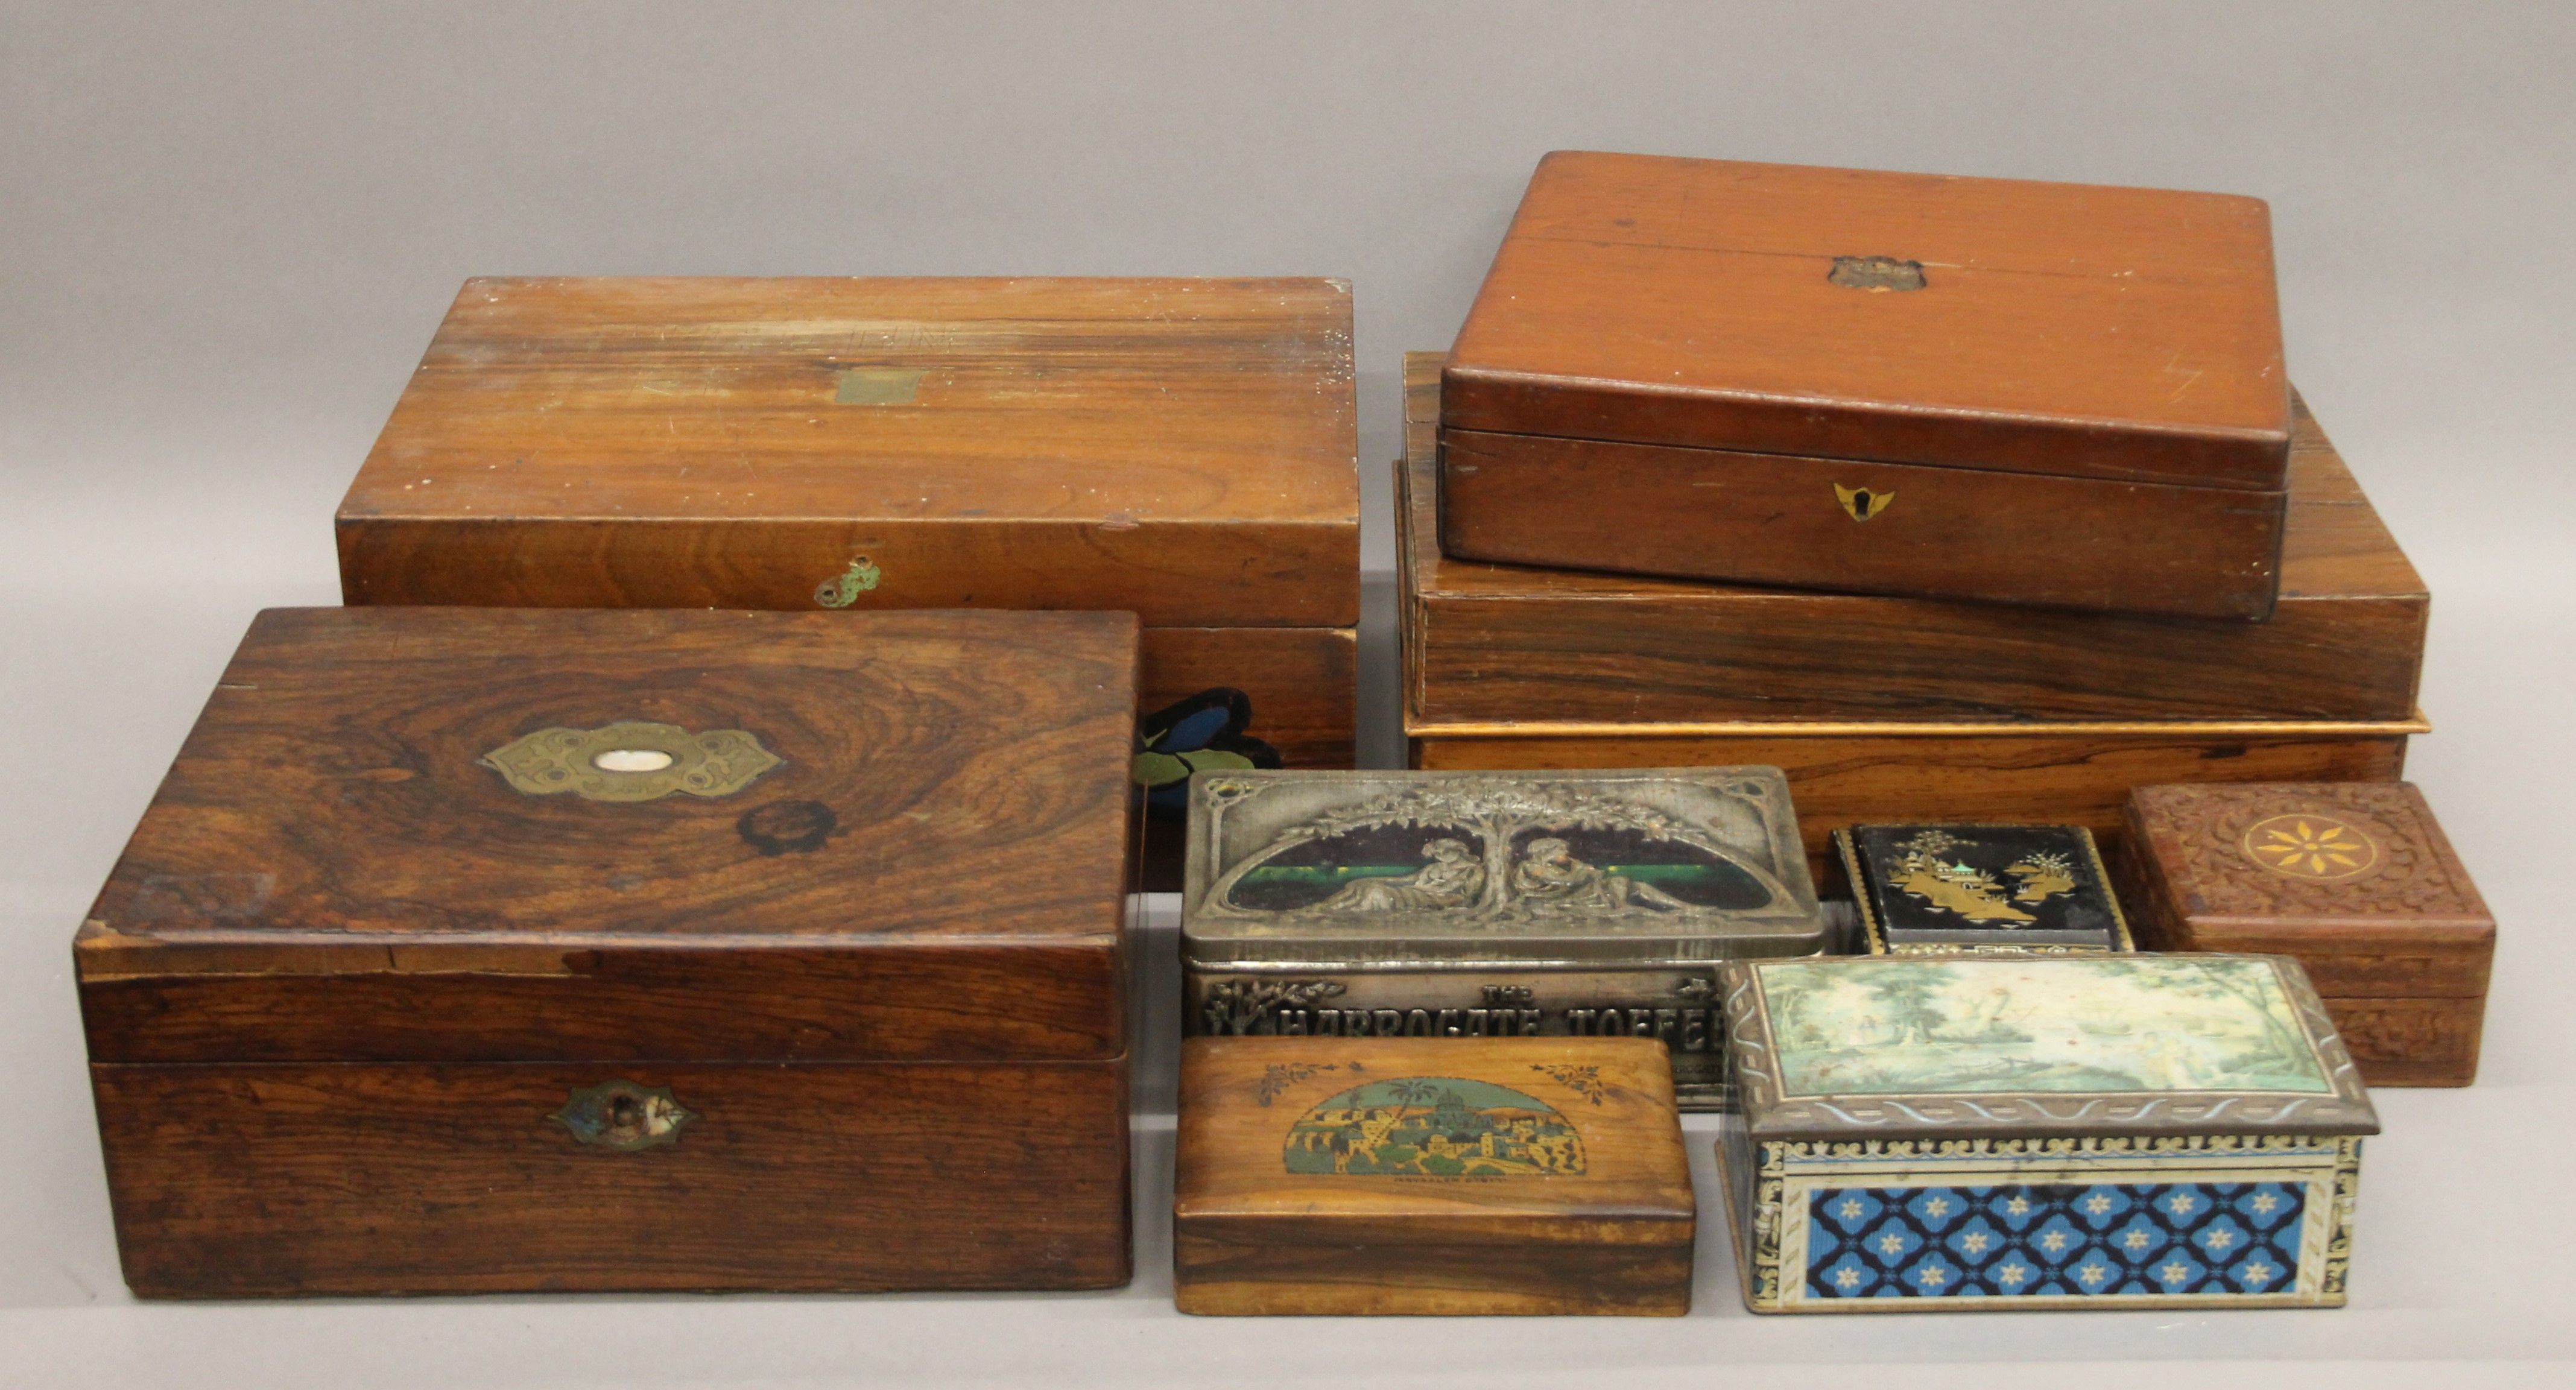 A quantity of various vintage wooden boxes, tins, etc.